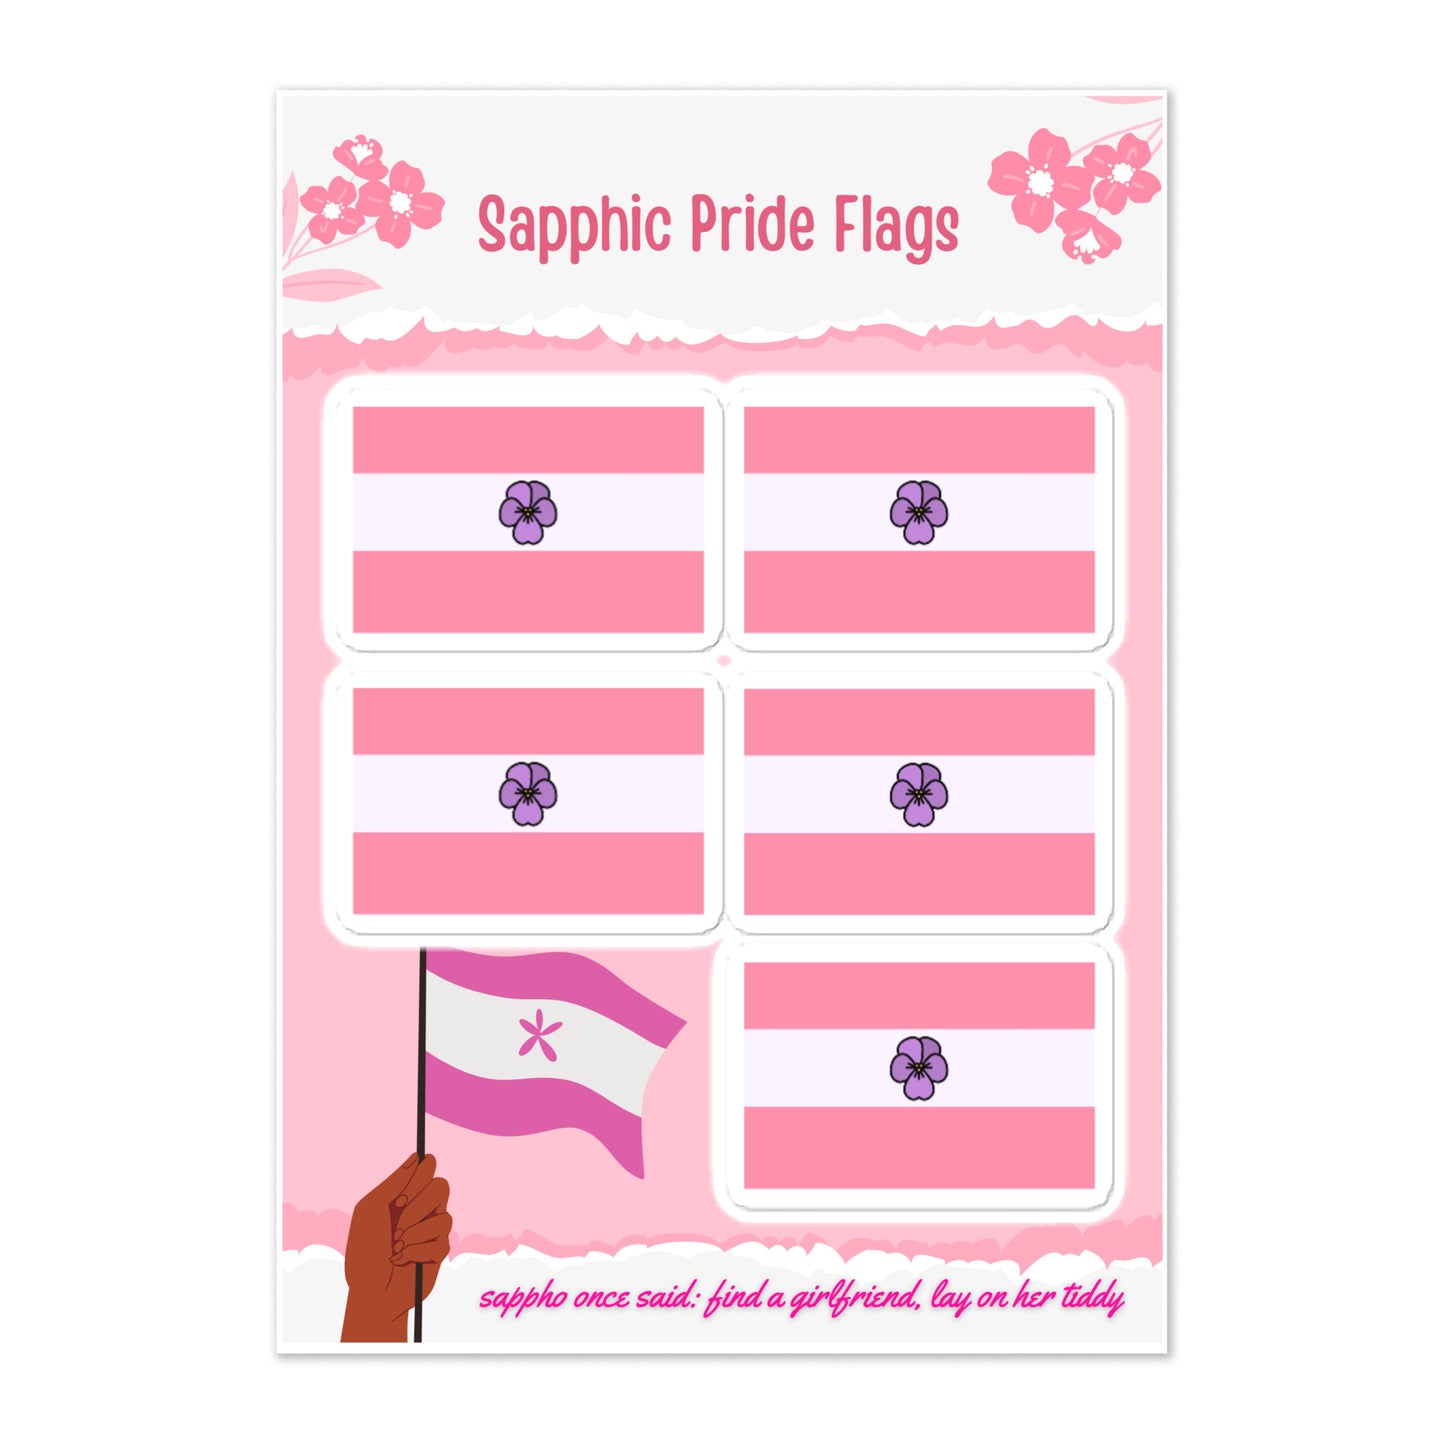 Sapphic Pride Flags